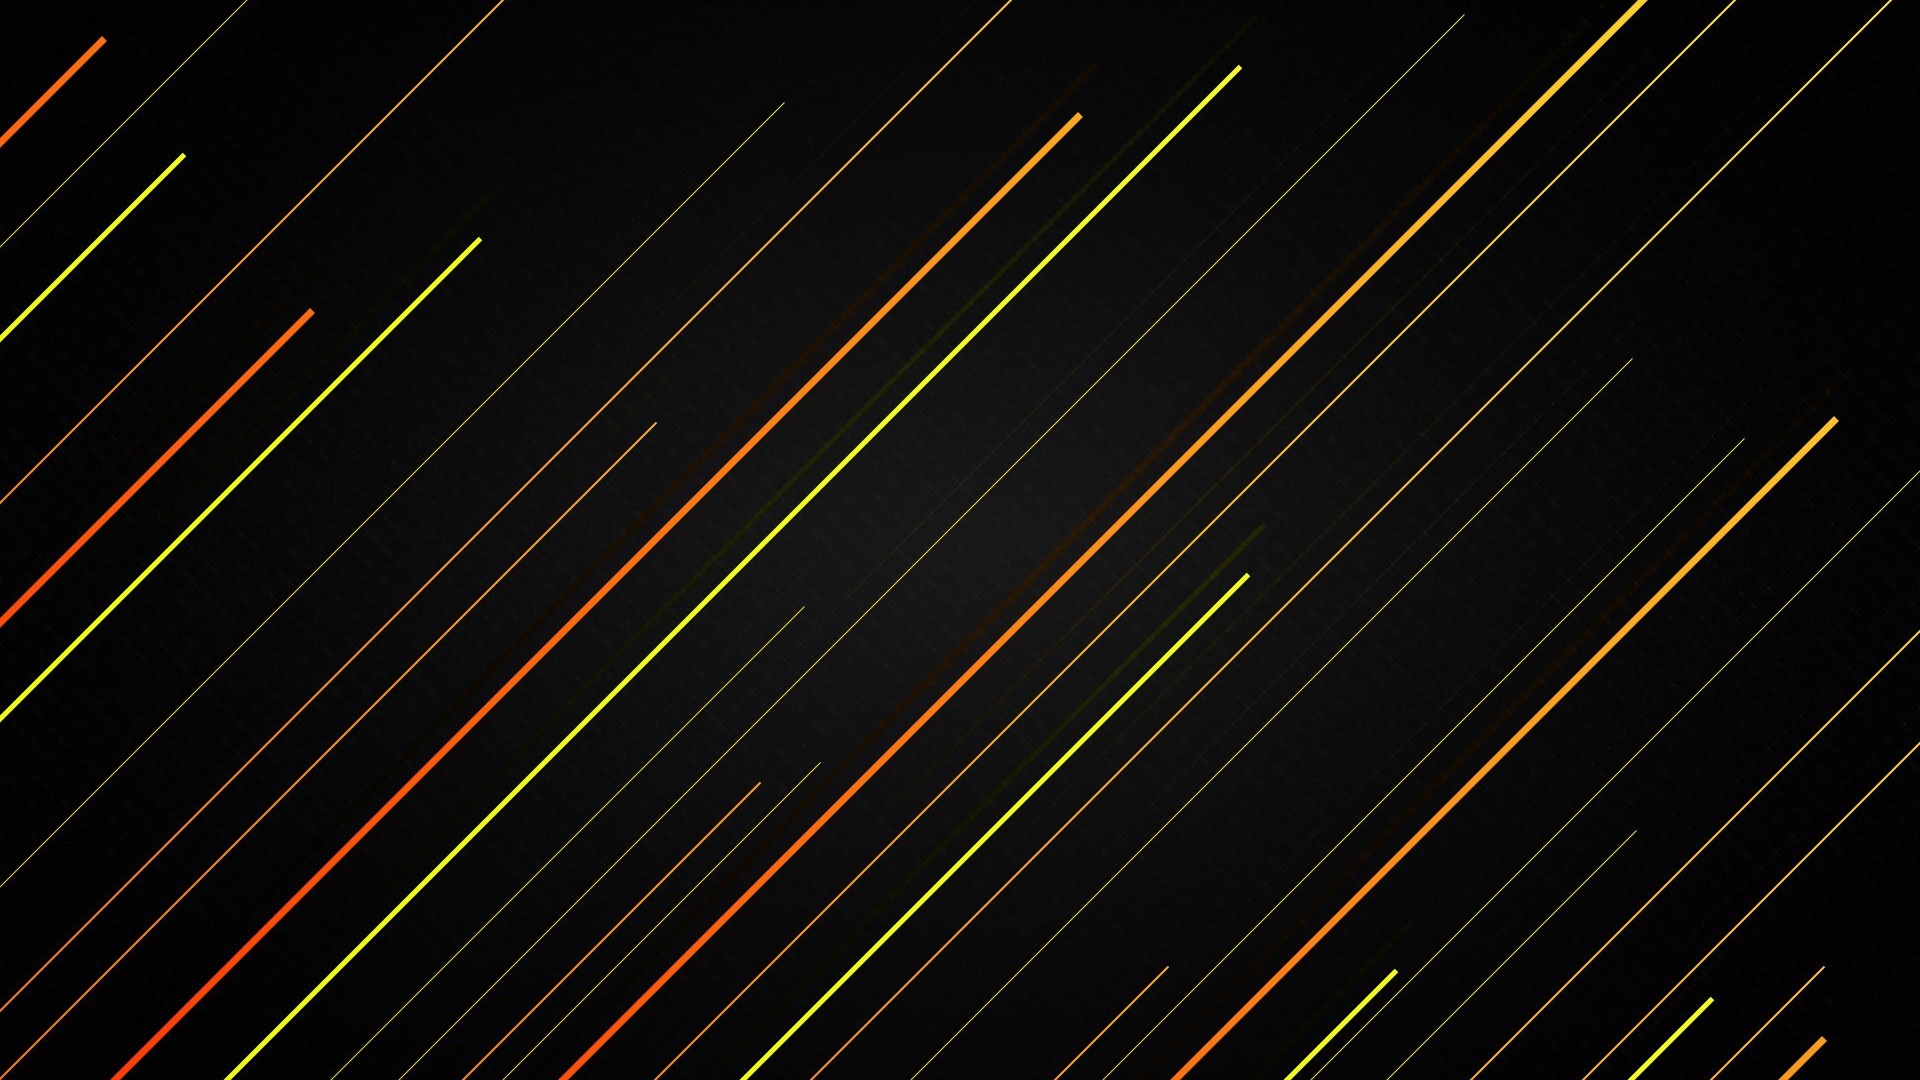 Minimalistic Stripes download wallpaper image